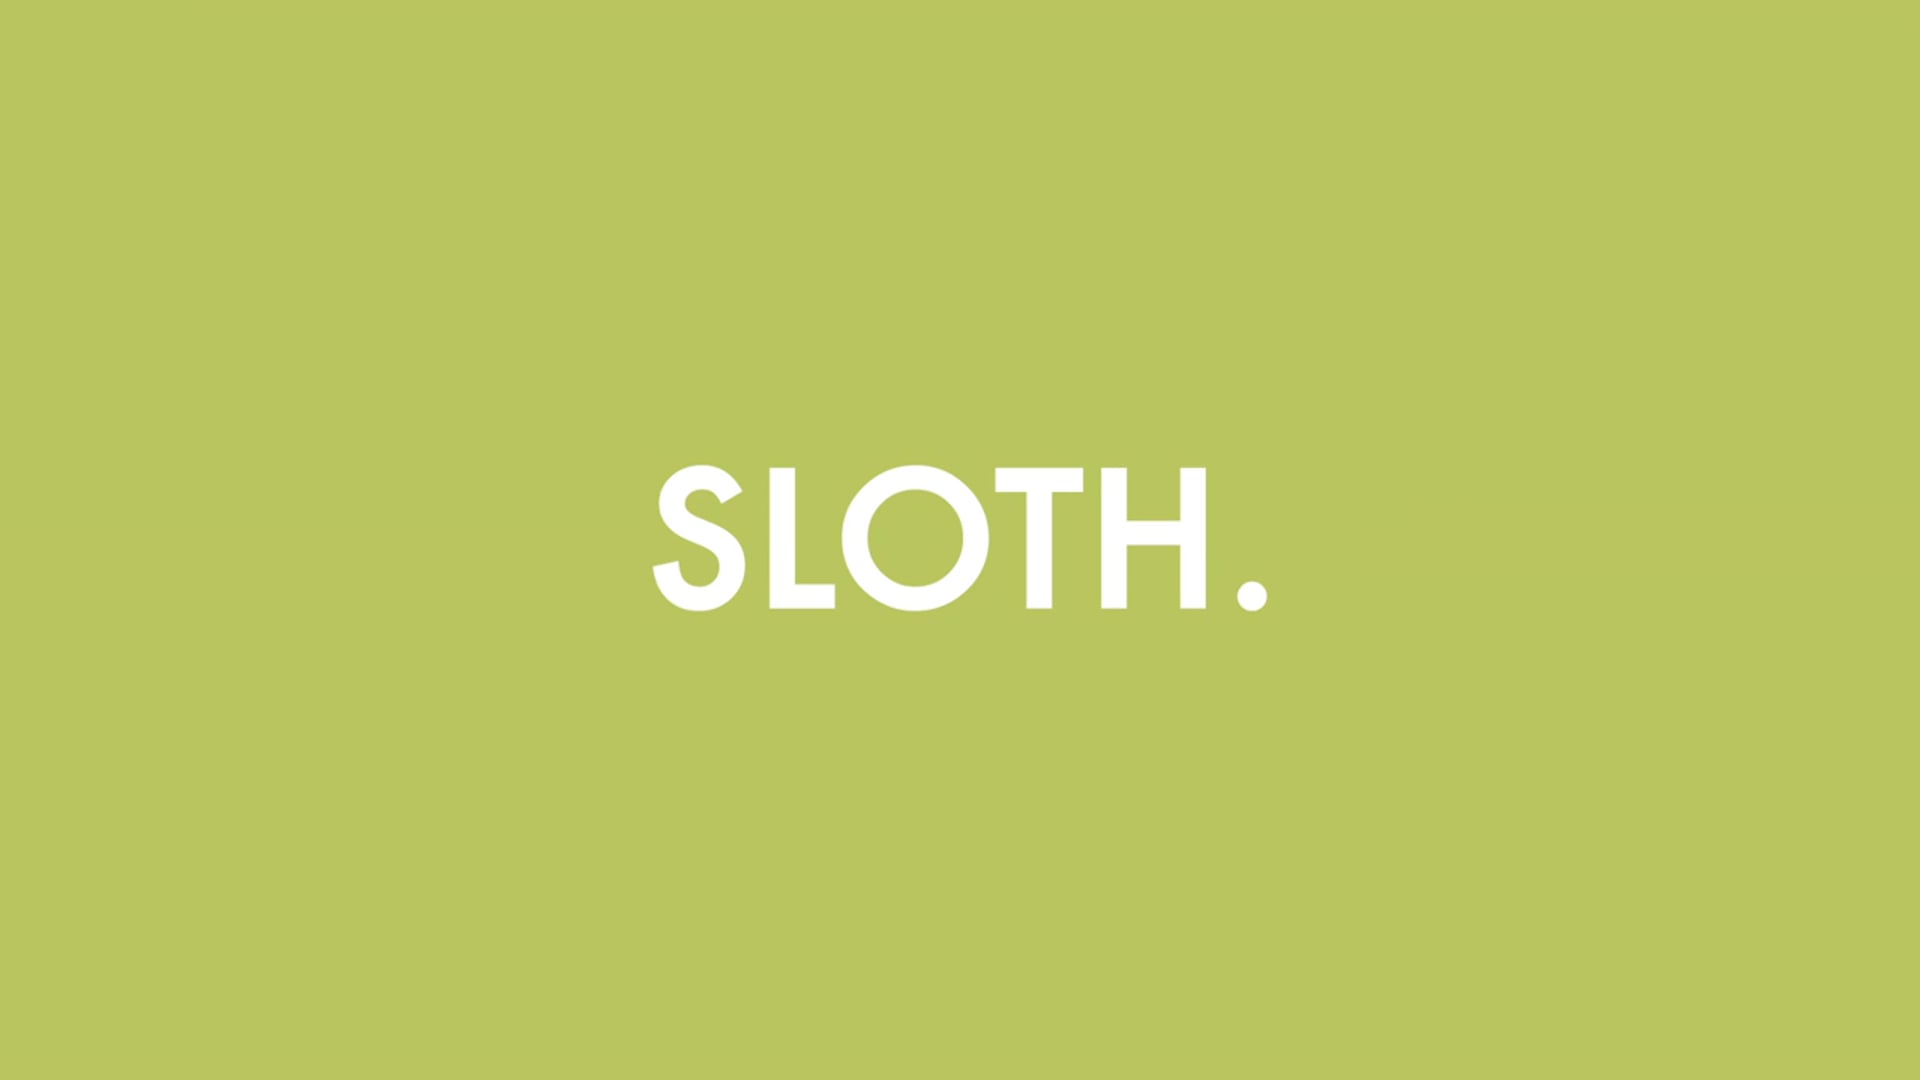 Sloth.